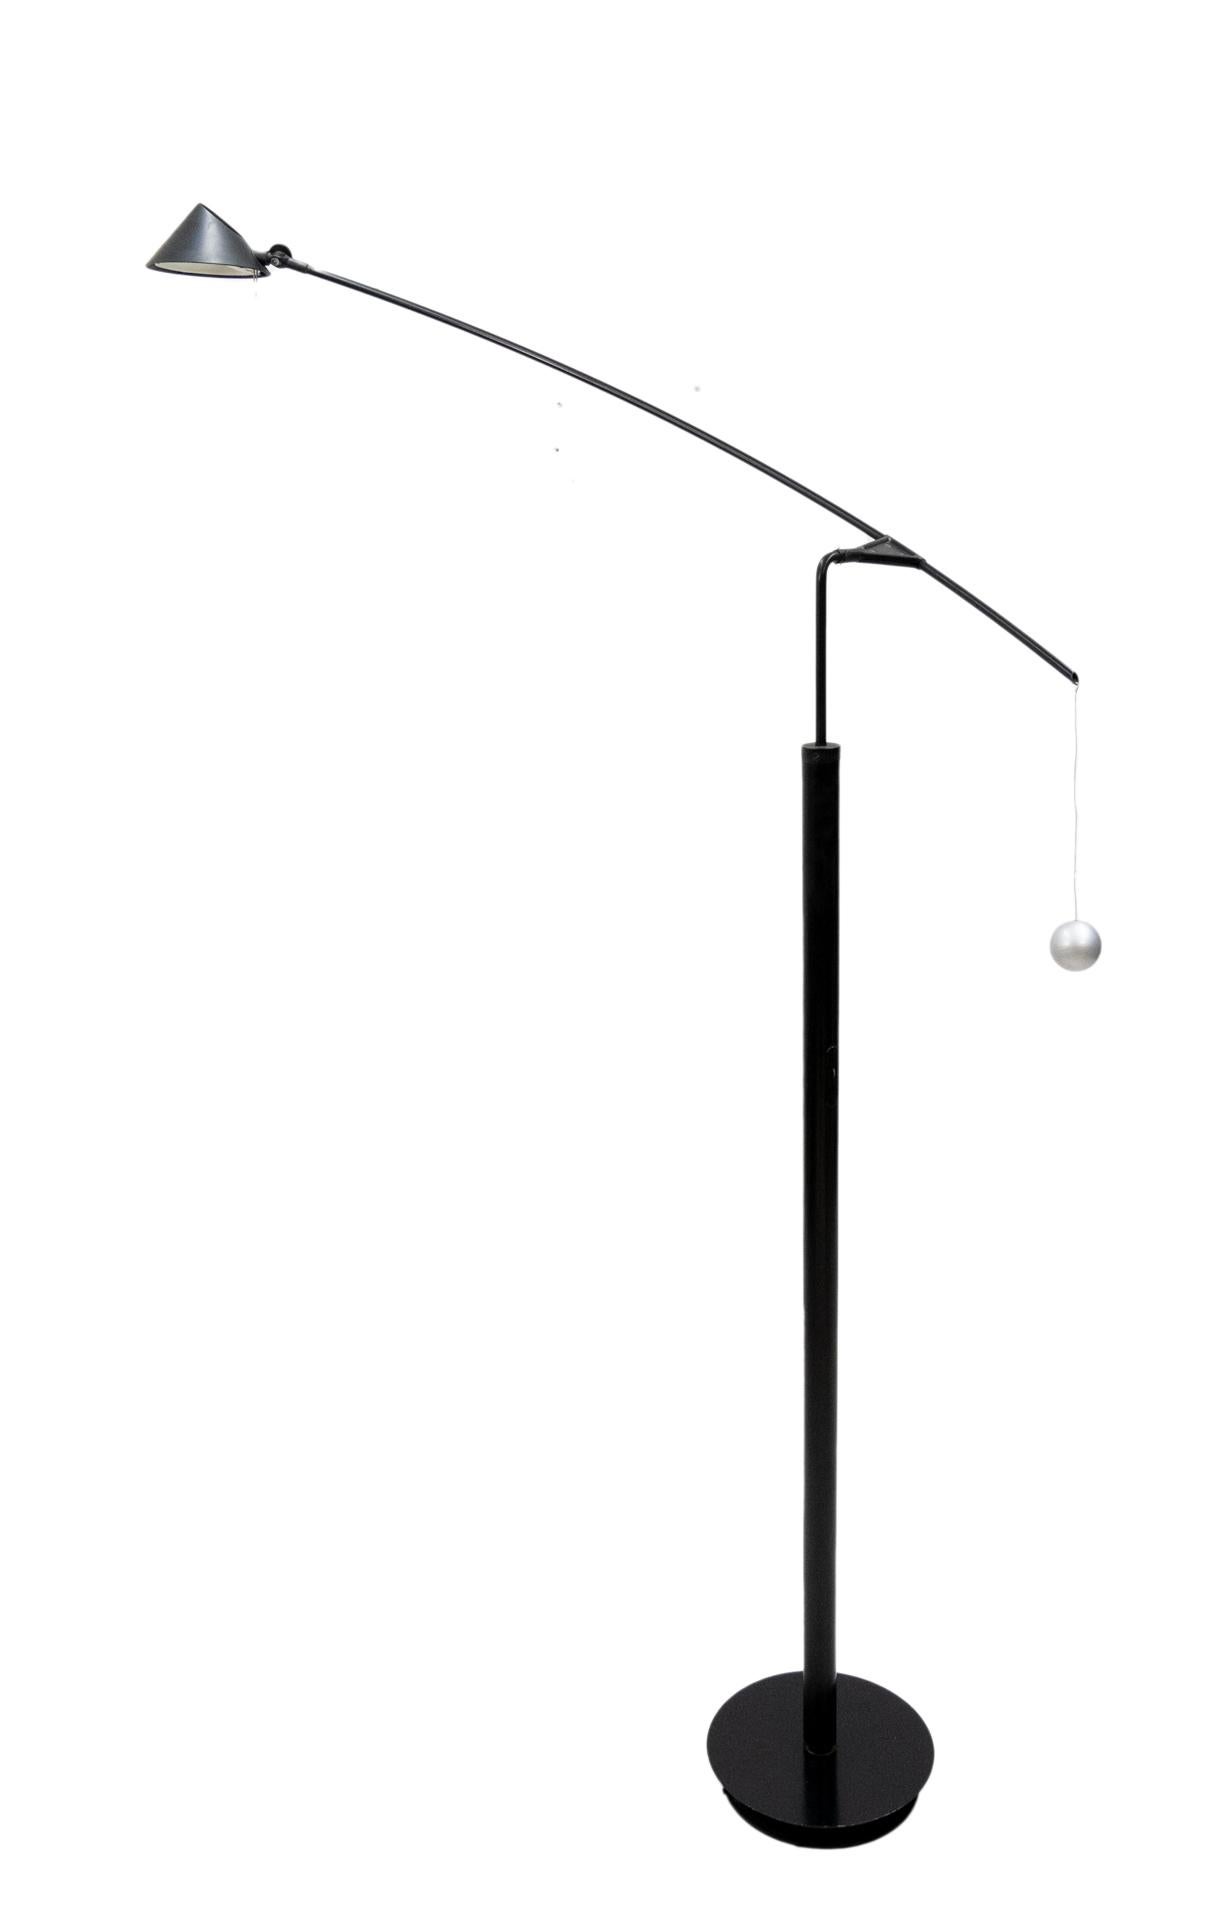 Artemide Counter Balance Floor Lamp Carlo Forcolini 2